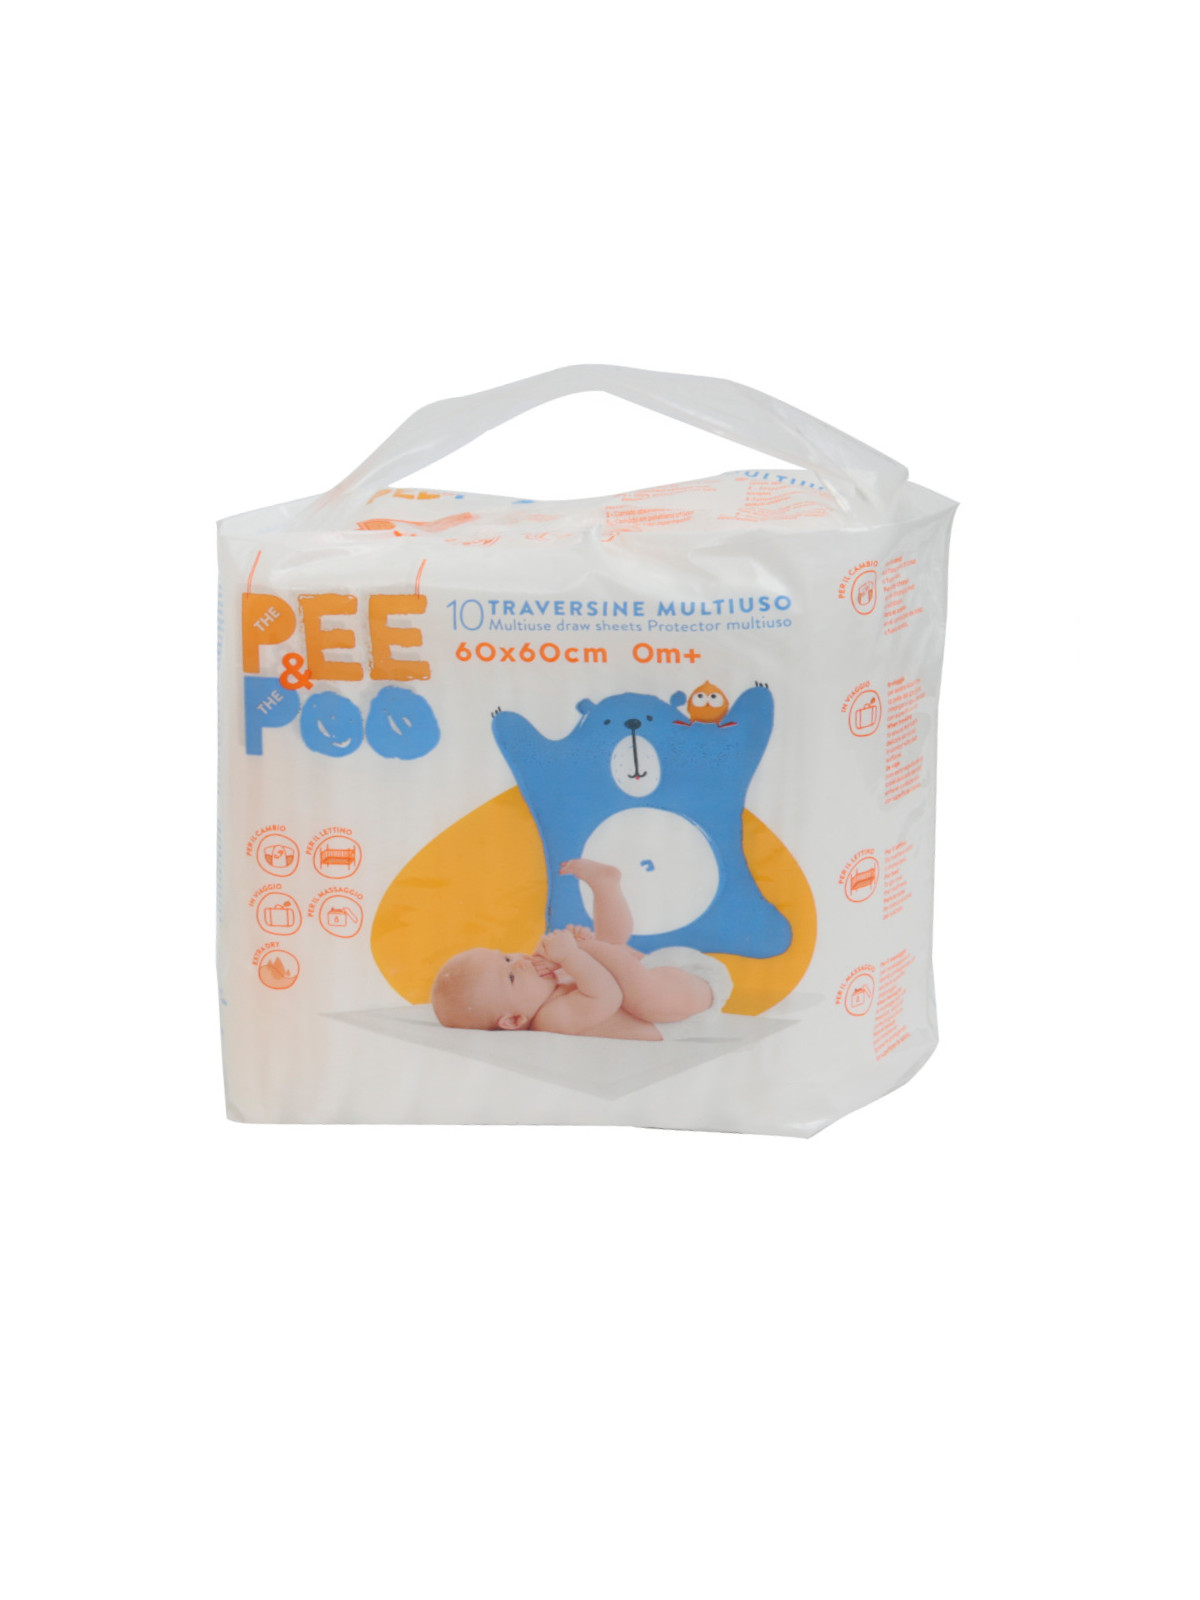 Pee&Poo Traversine 60×60 - Bimbostore